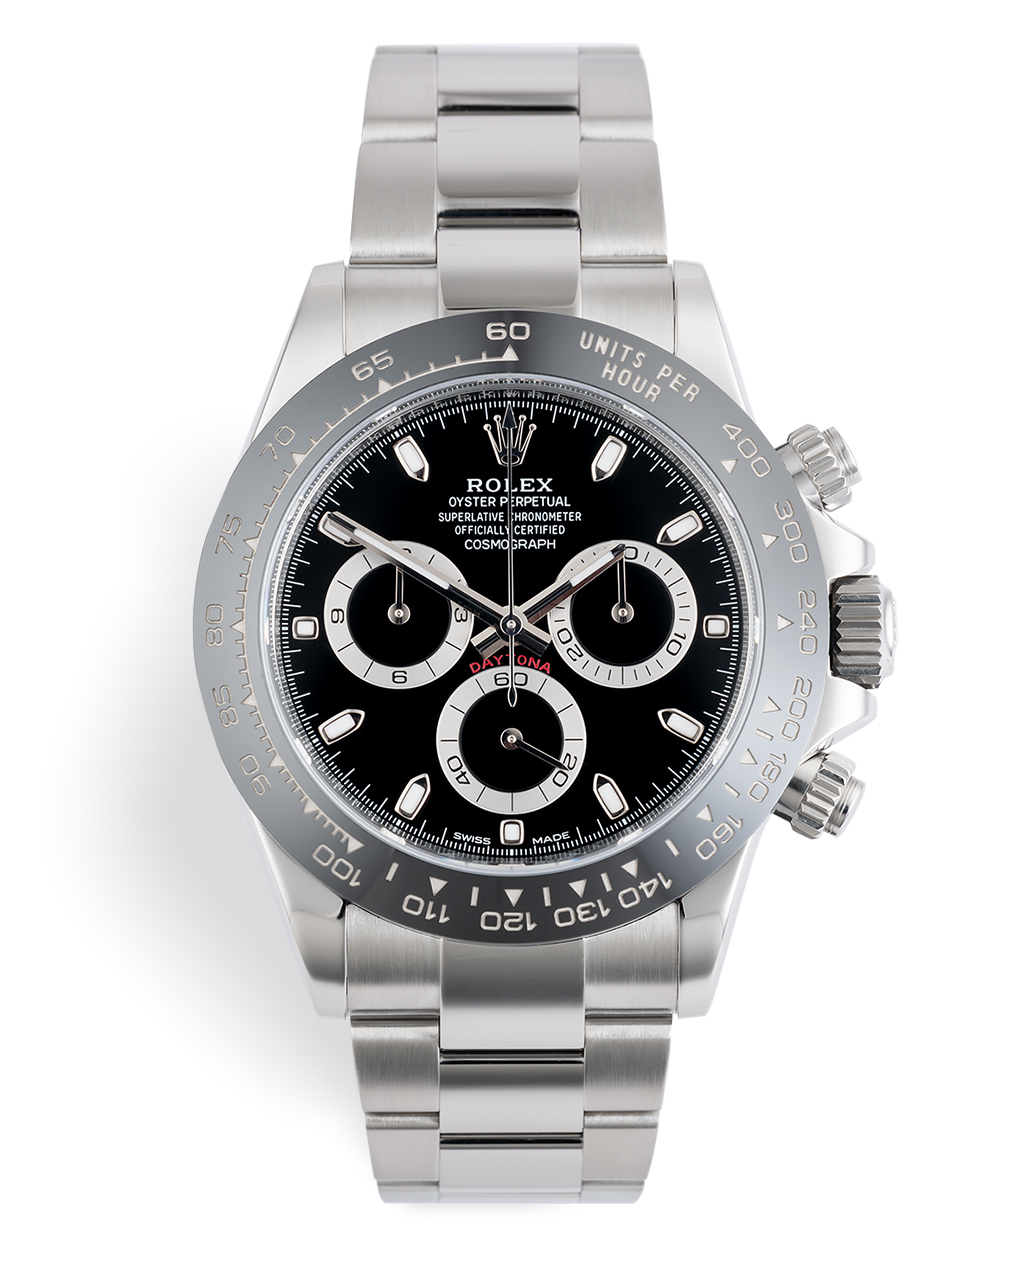 Rolex Cosmograph Daytona Watches ref 116500LN Rolex Warranty to